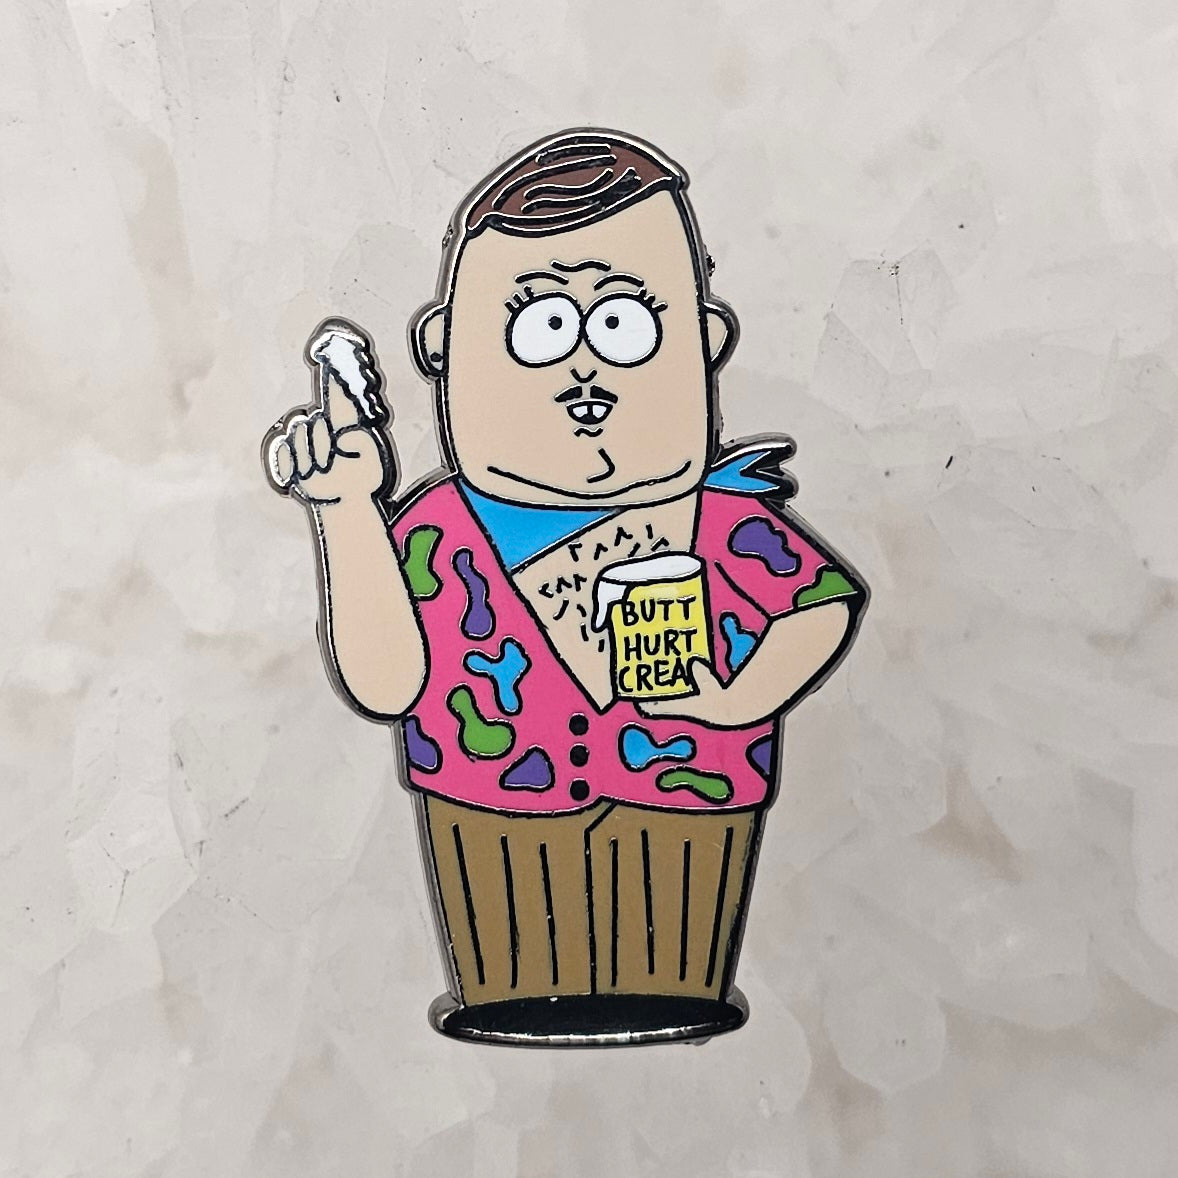 Big Gay Al Butt Hurt Cream South Park Comedy Tv 90s Cartoon Enamel Pins Hat Pins Lapel Pin Brooch Badge Festival Pin